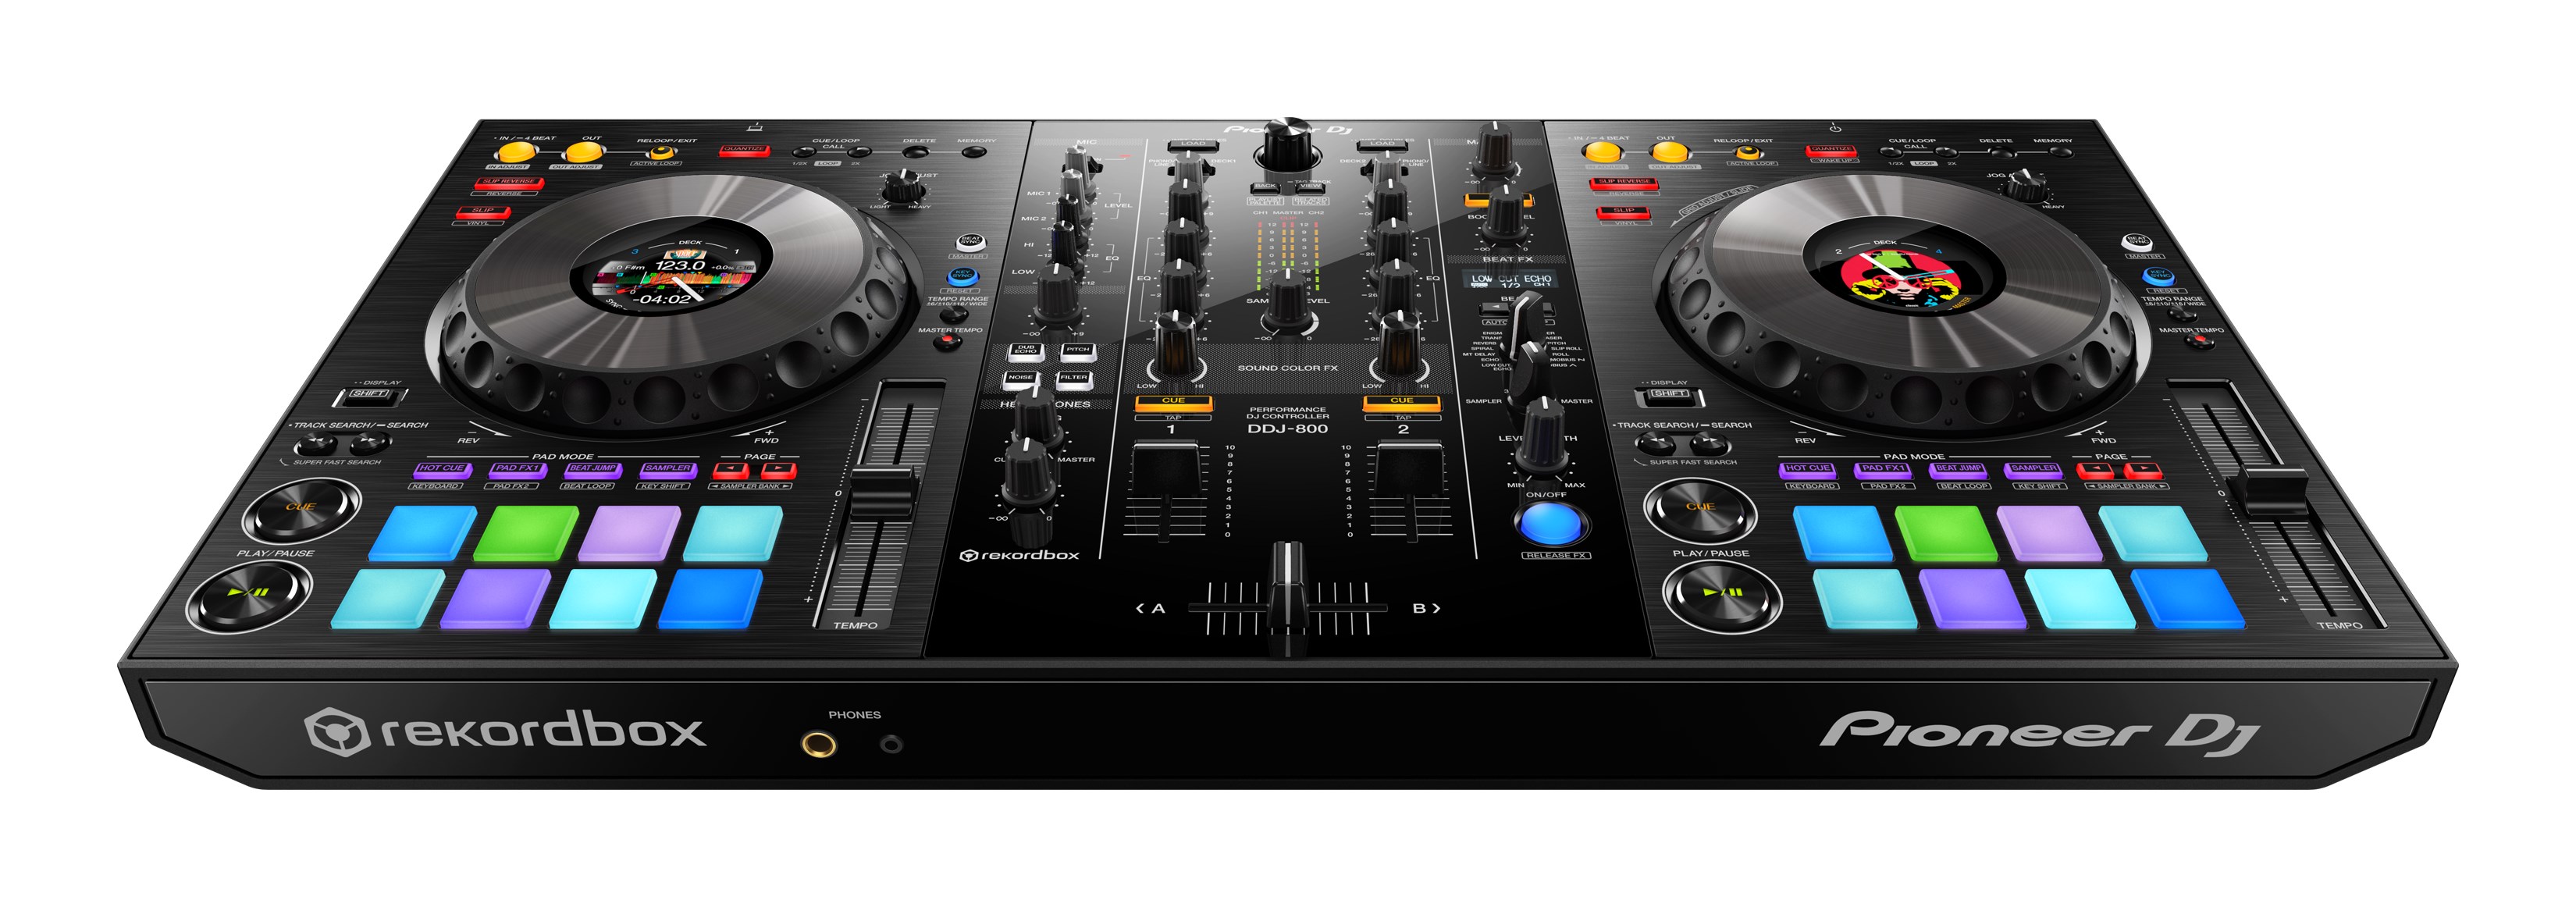 Pioneer Dj Ddj-800 - USB DJ-Controller - Variation 2